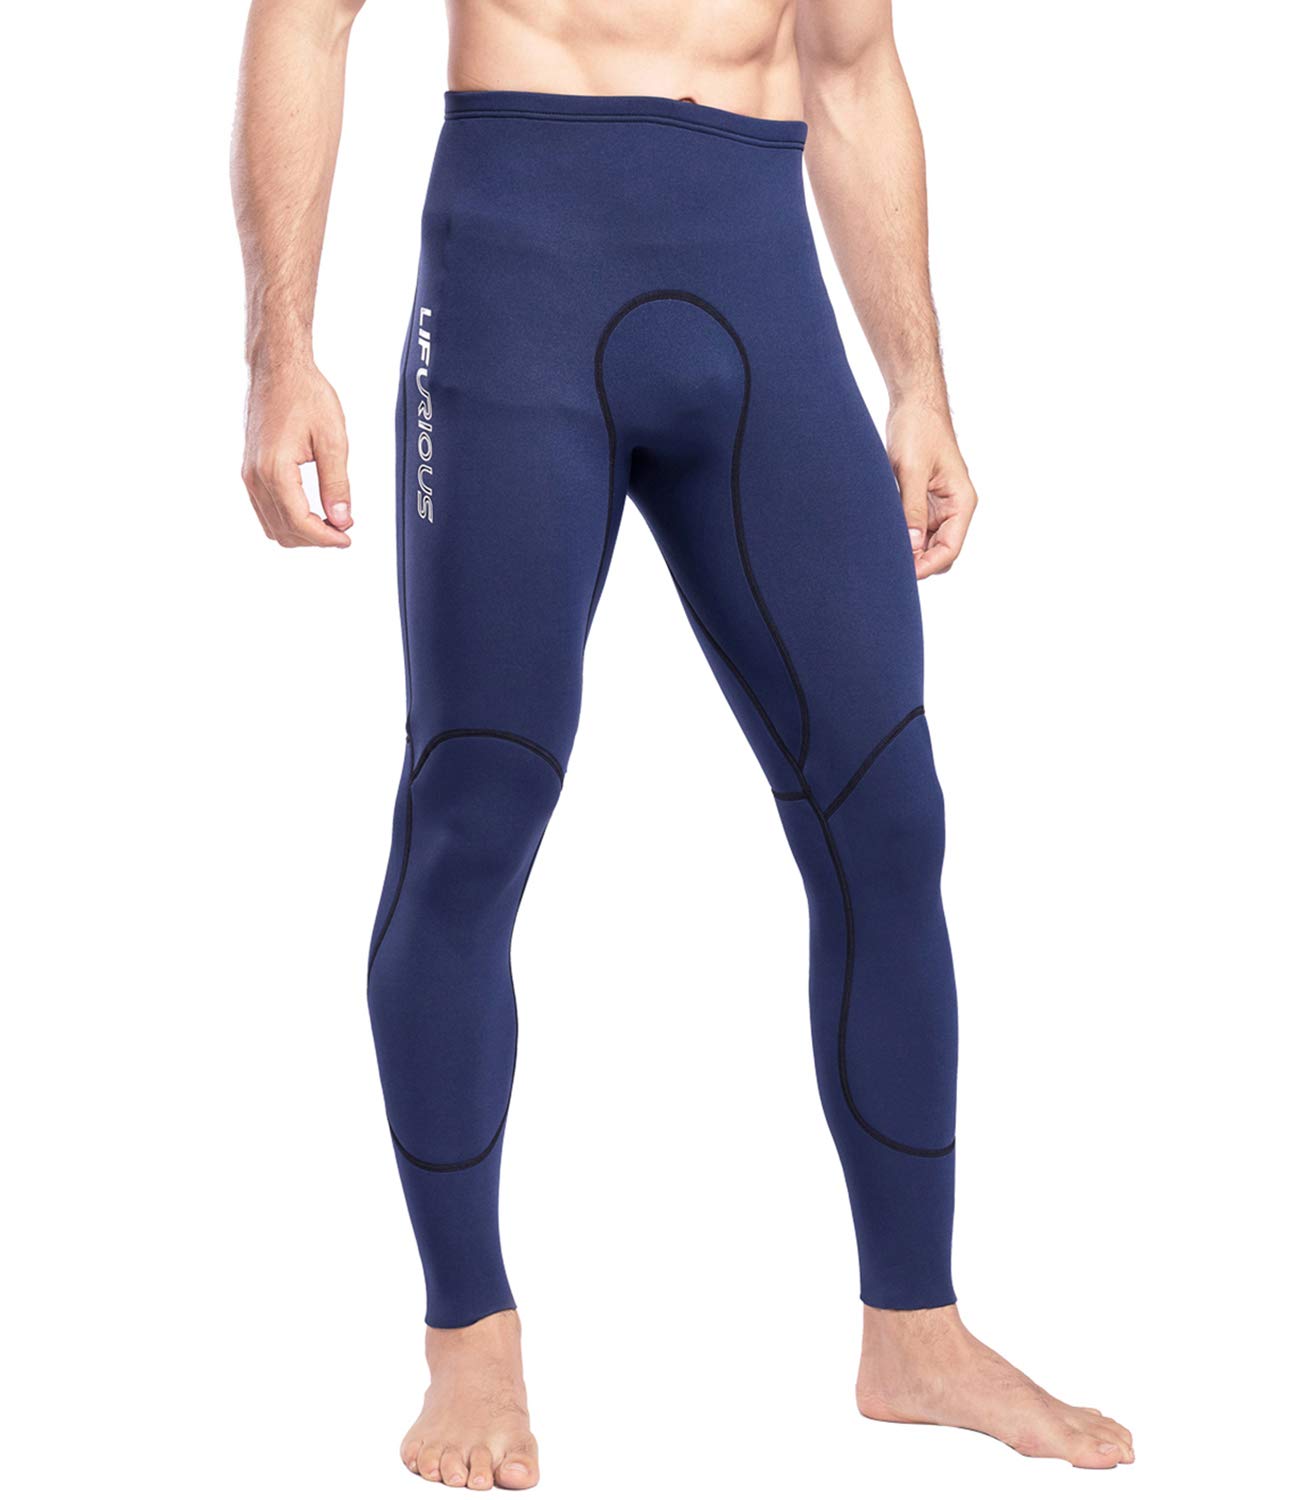 LIFURIOUS Men's 2mm Neoprene Tight Wetsuit Pants Swimming Leggings